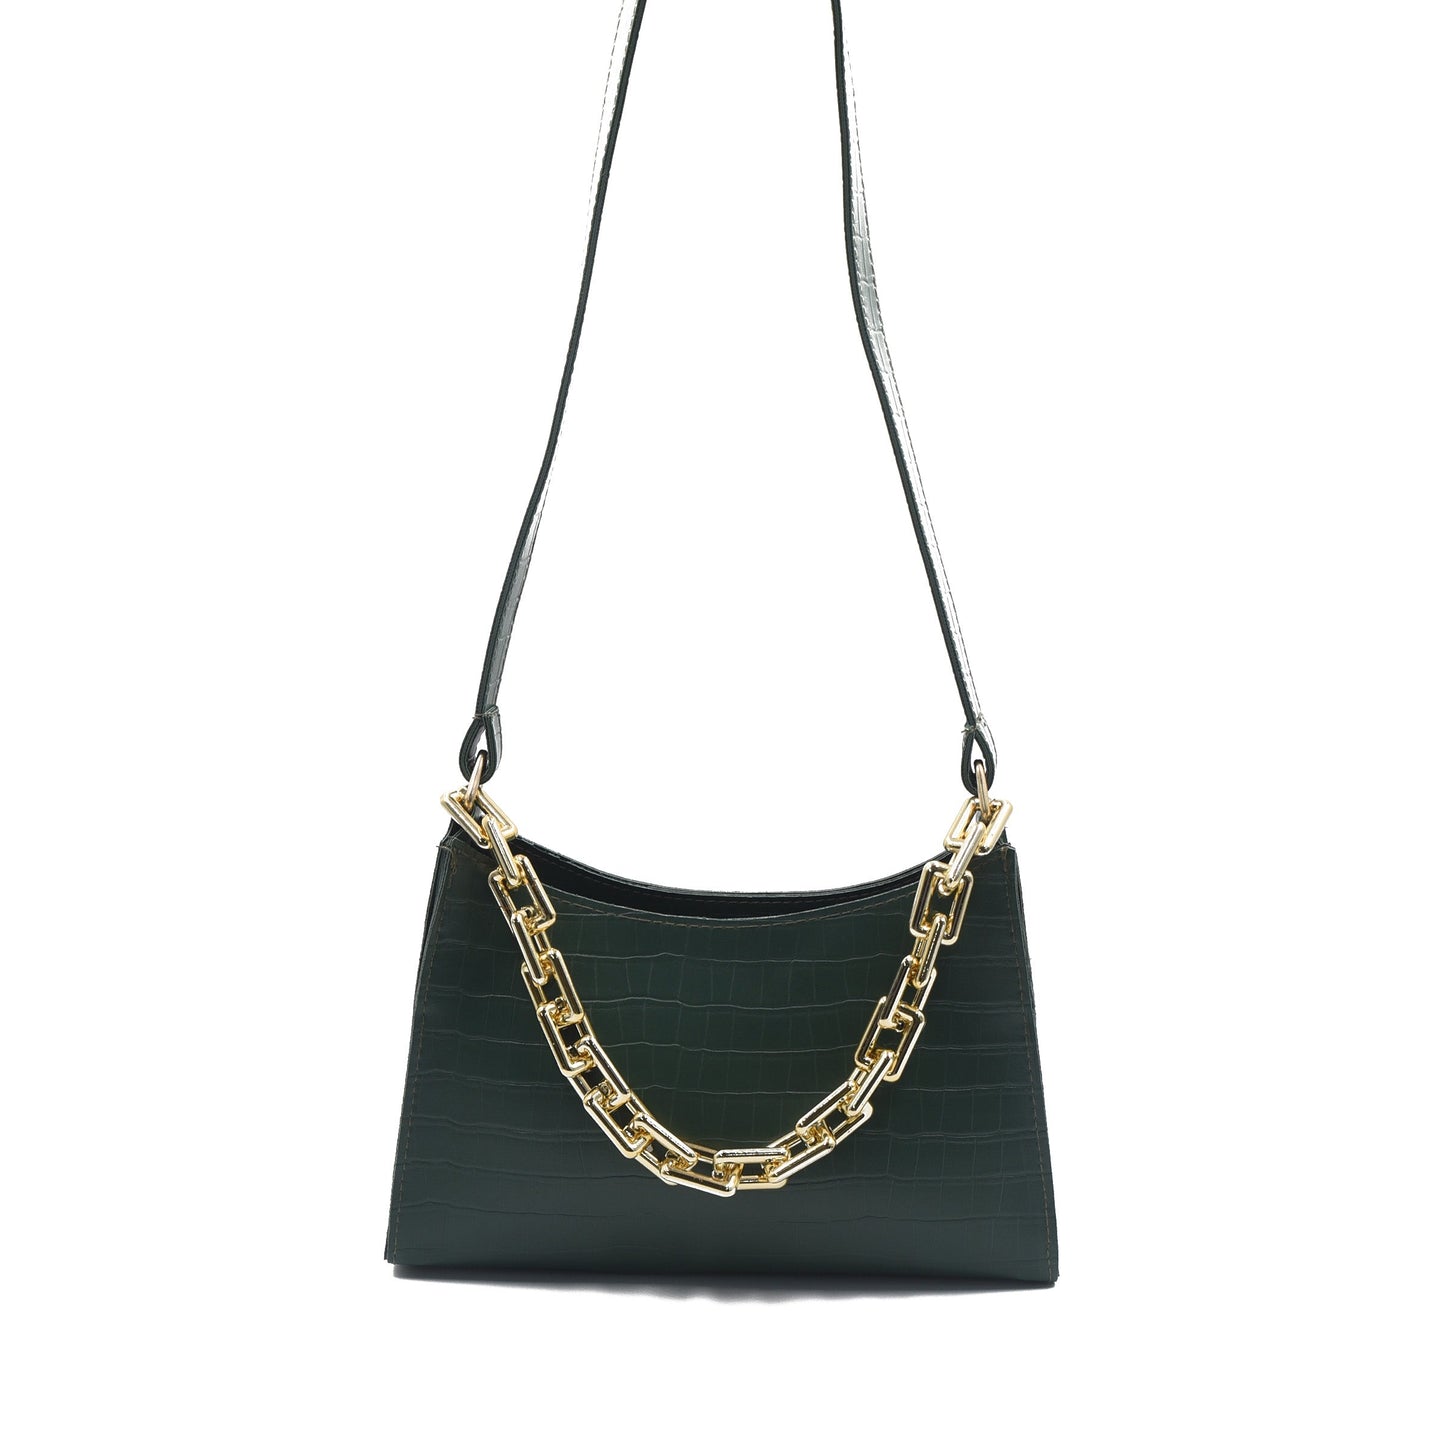 Belle Chic Convertible Handbag - Green